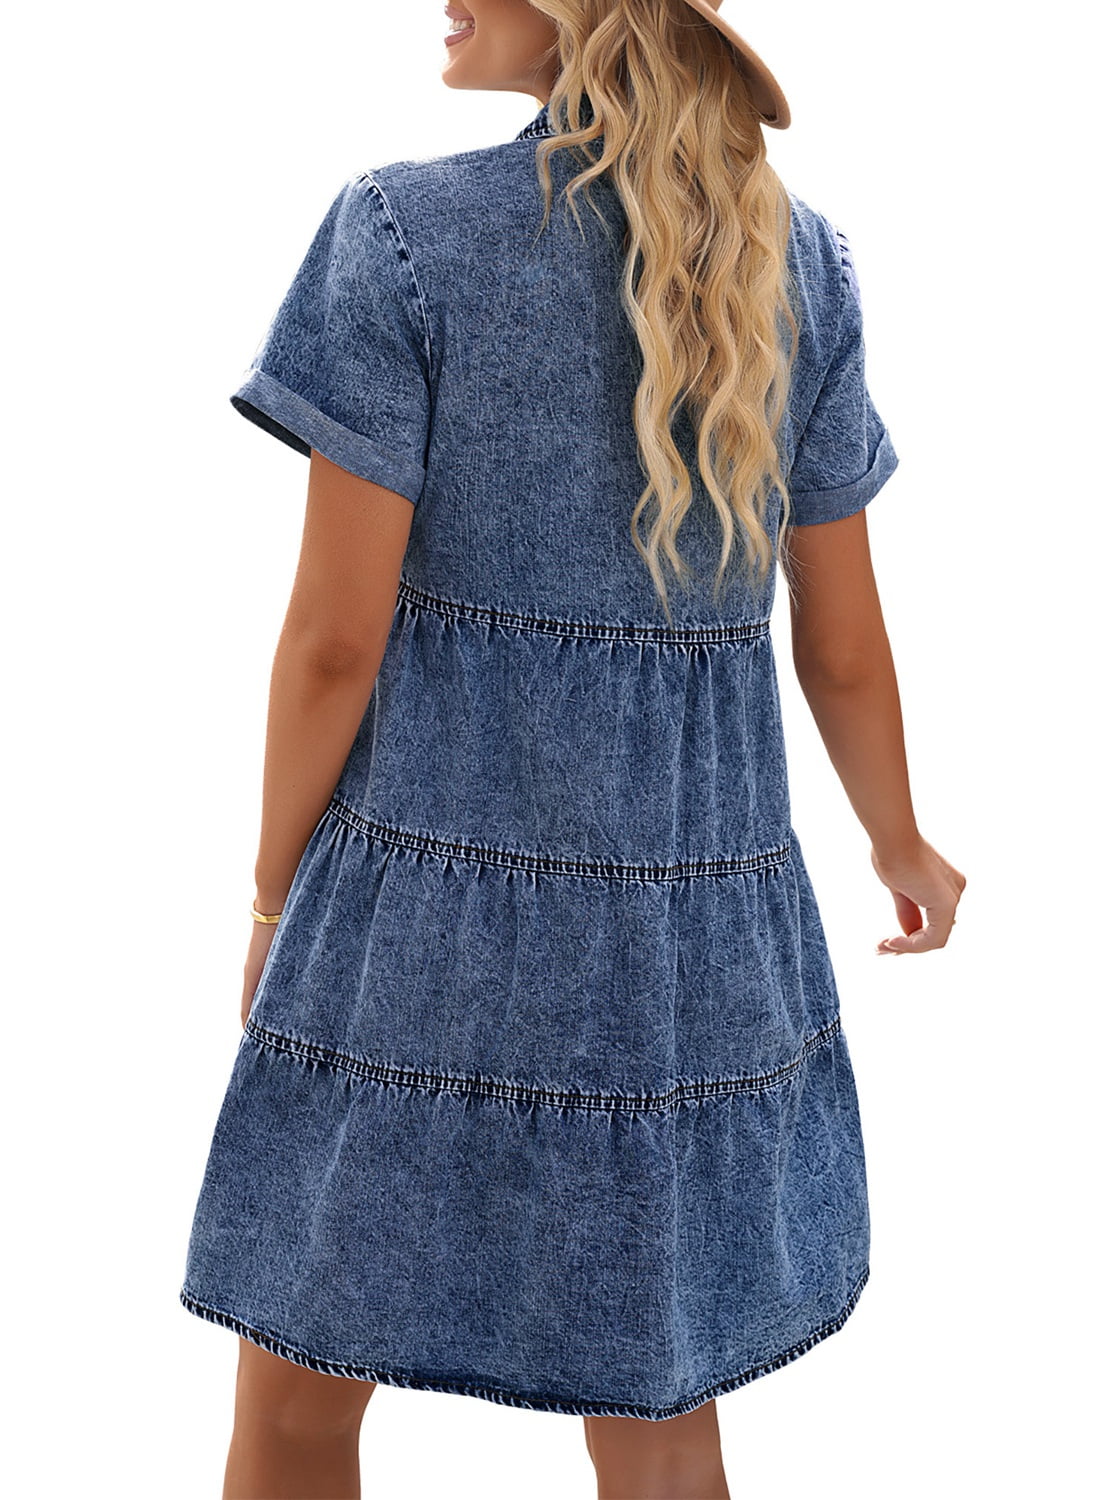 LookbookStore Women s Washed Vintage Denim Dress Short Sleeve Button Down  Shirt Dress Size XL Size 16 Size 18